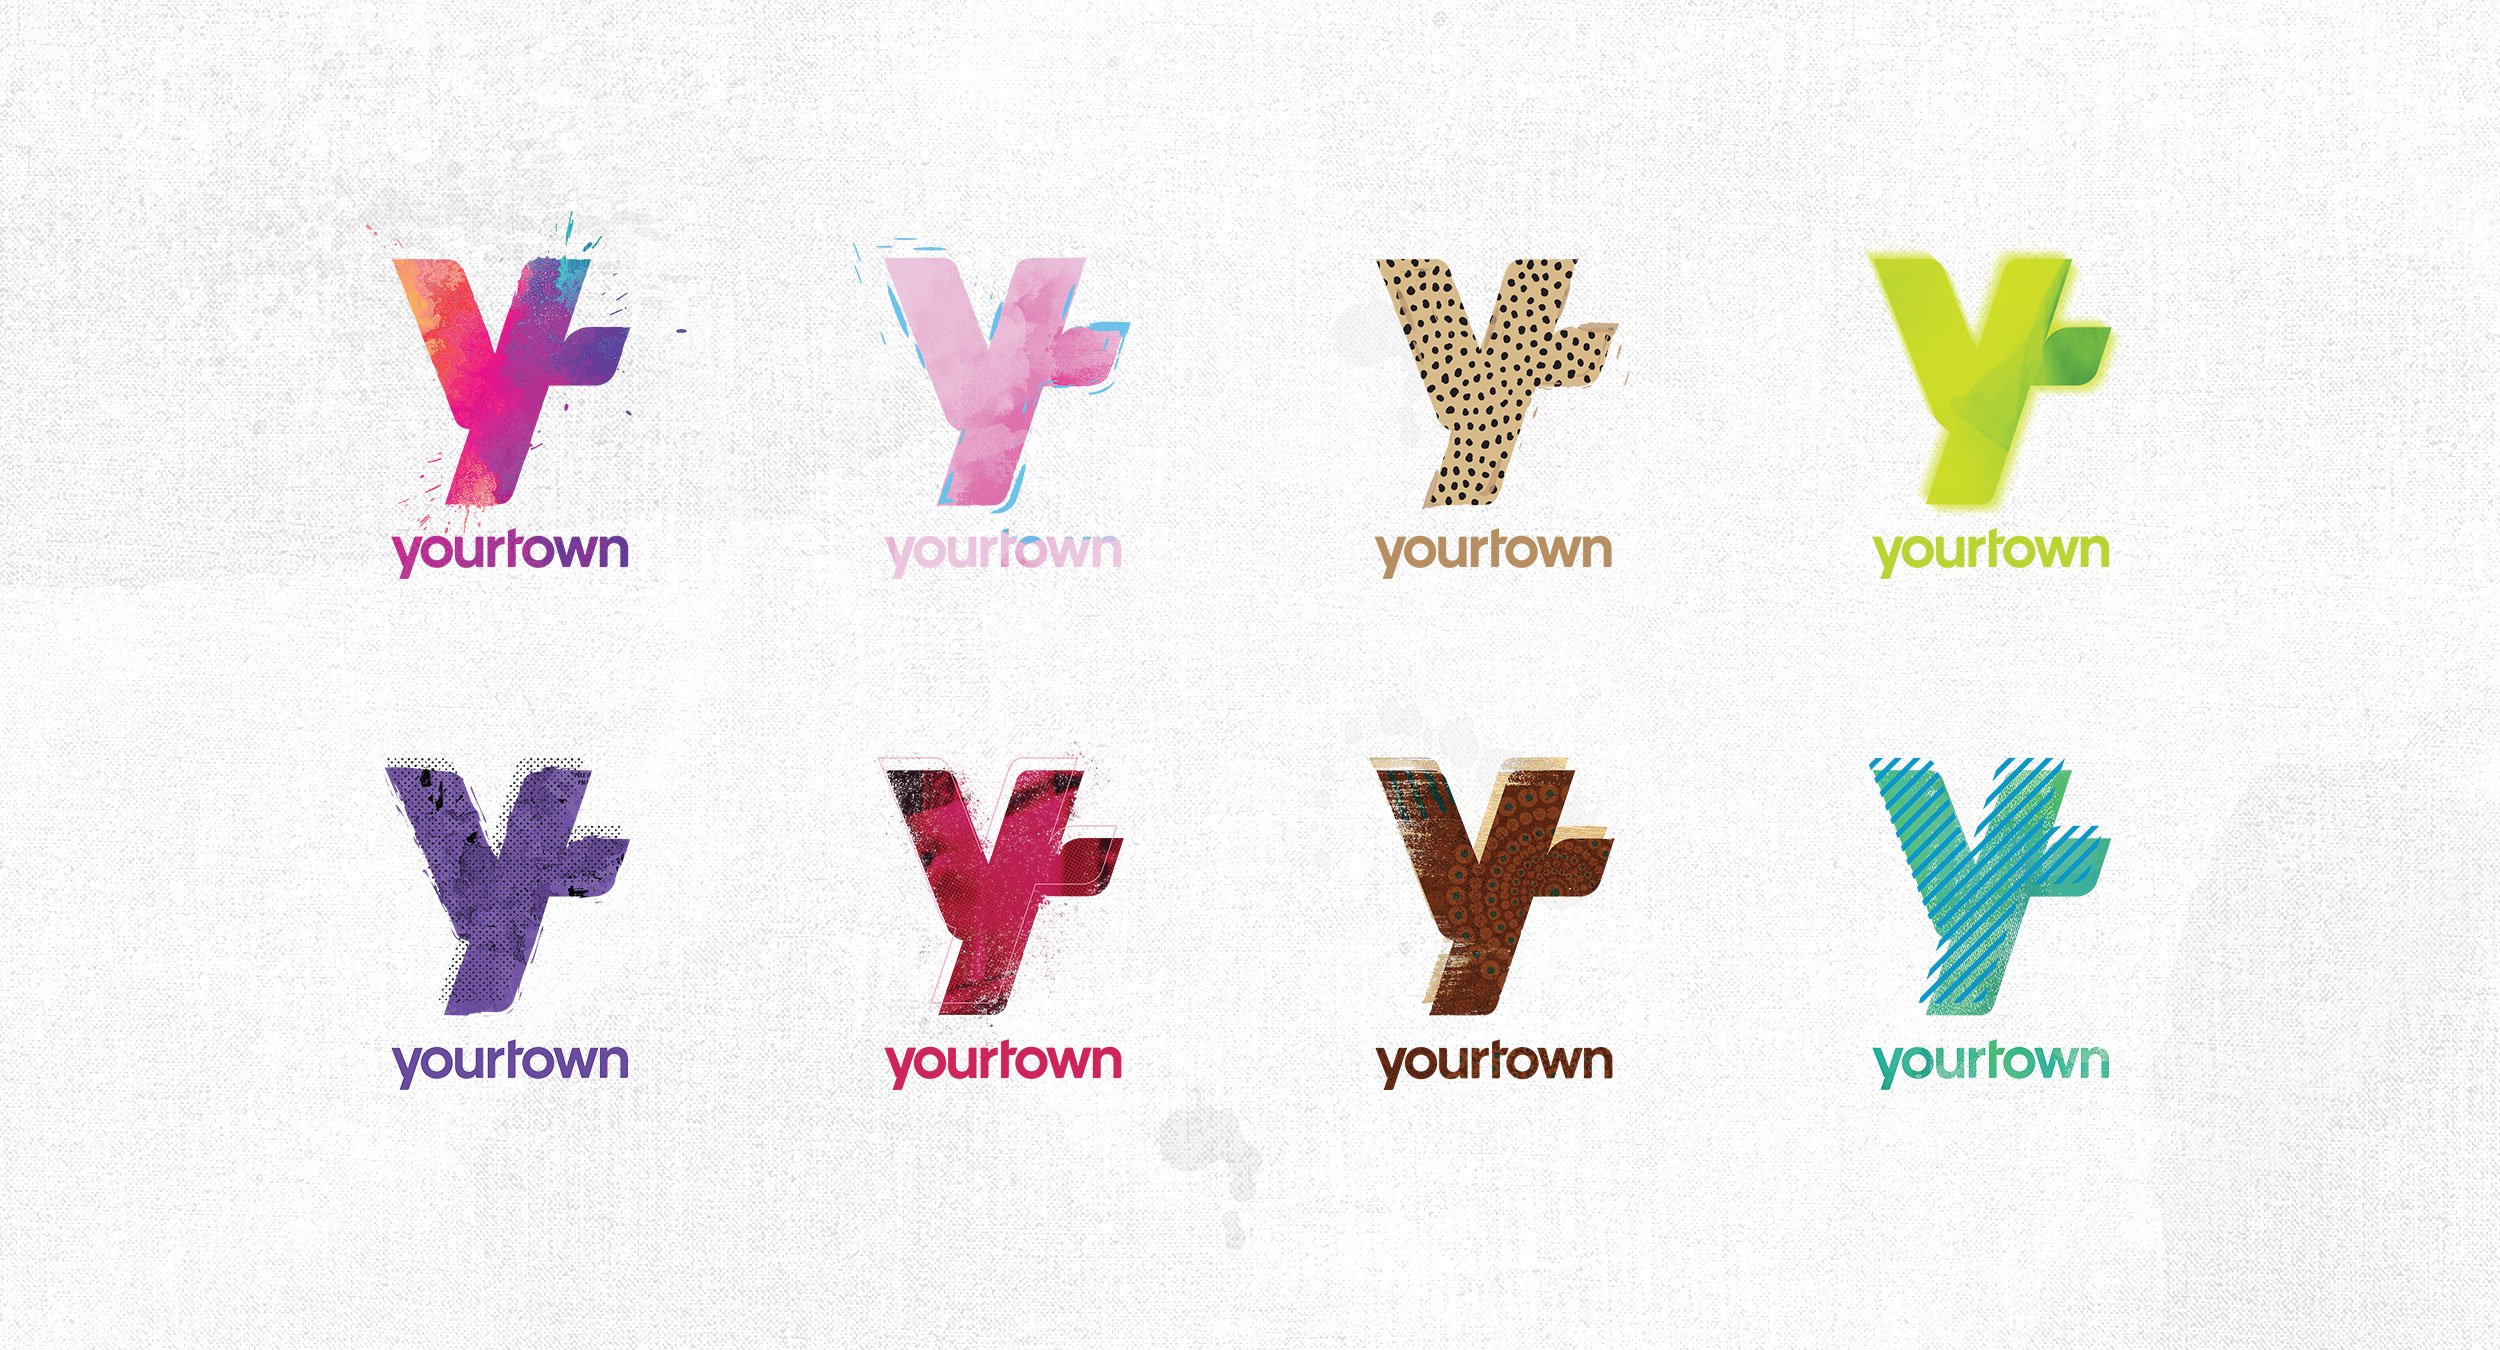 YT_Logos2.jpg